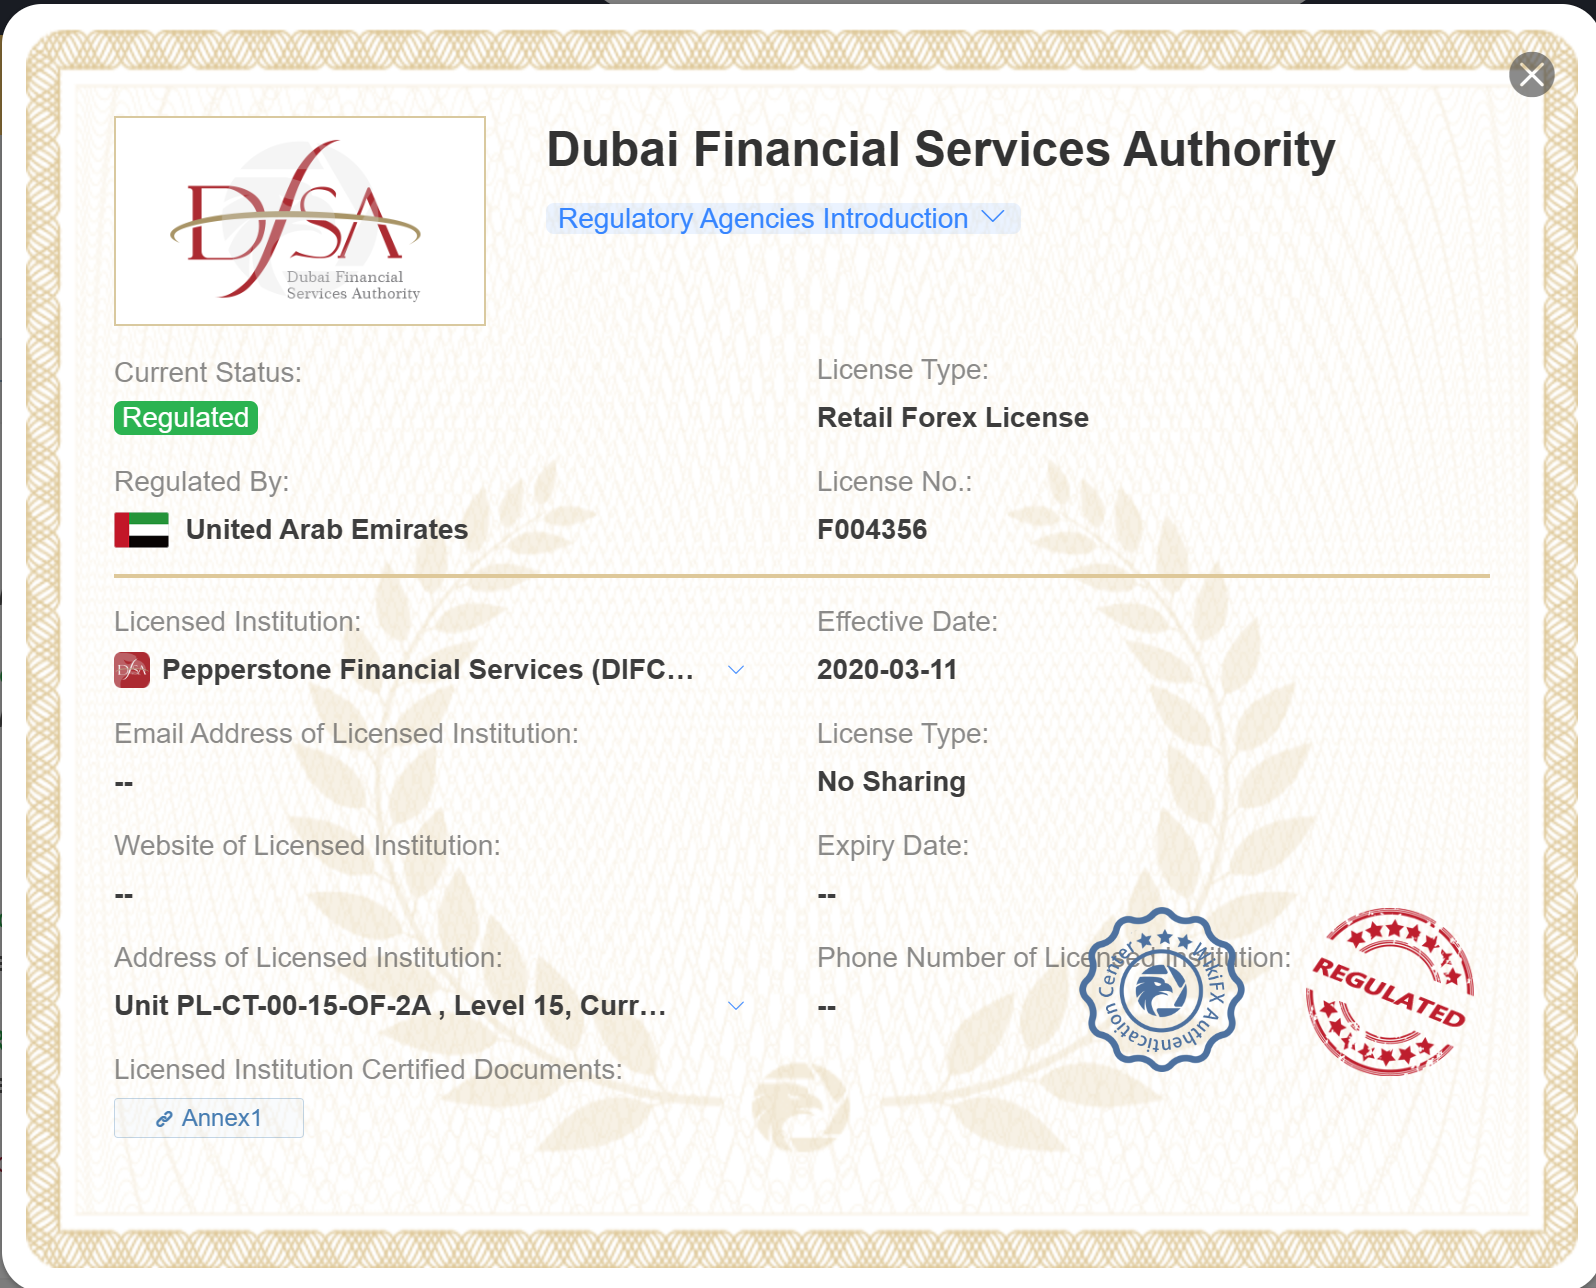 DFSA license